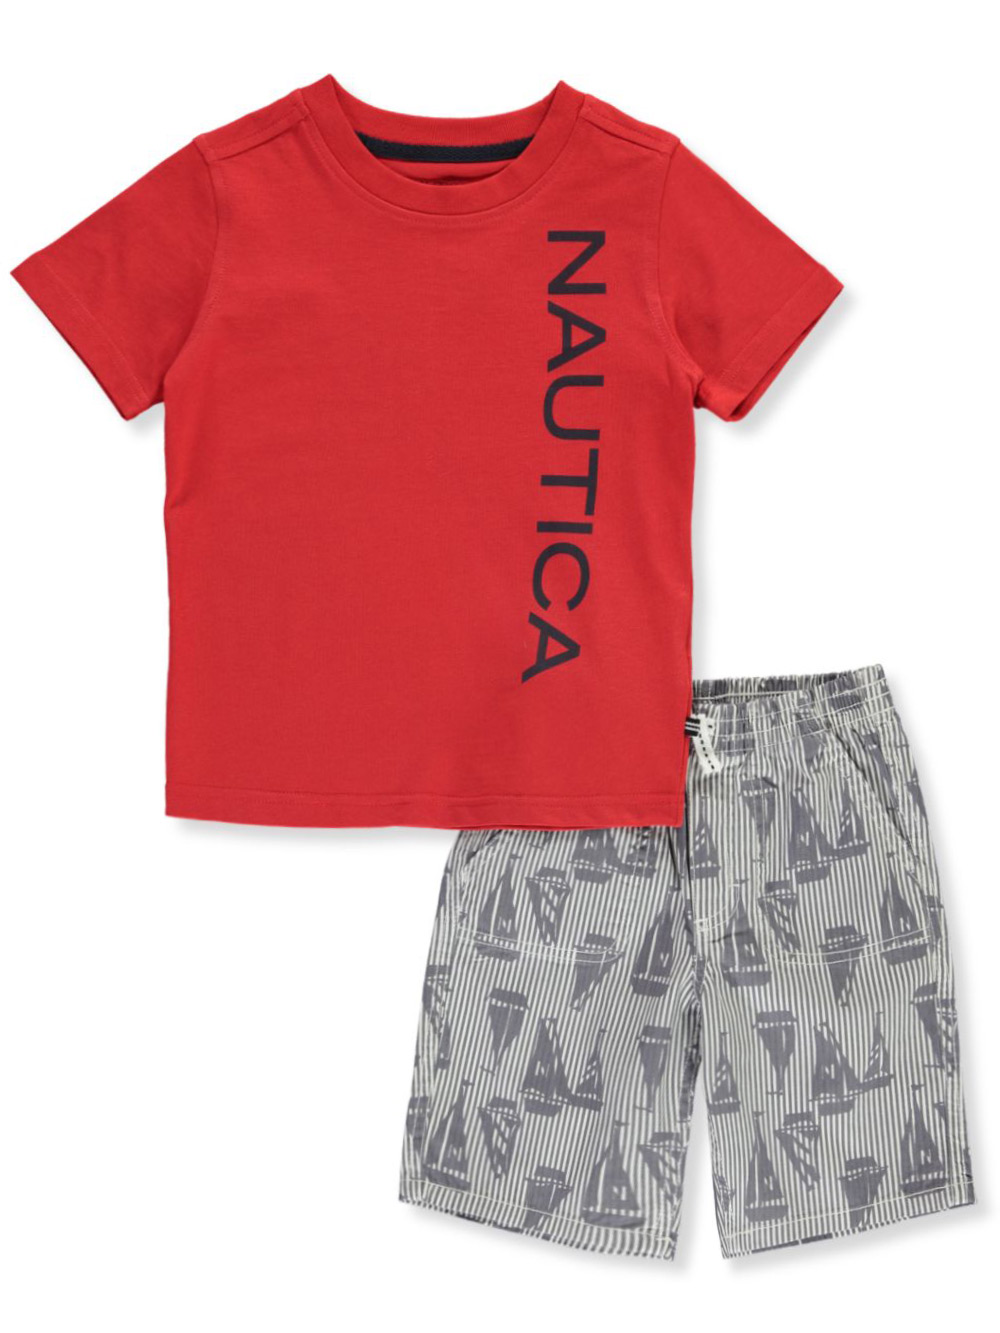 nautica baby clothes